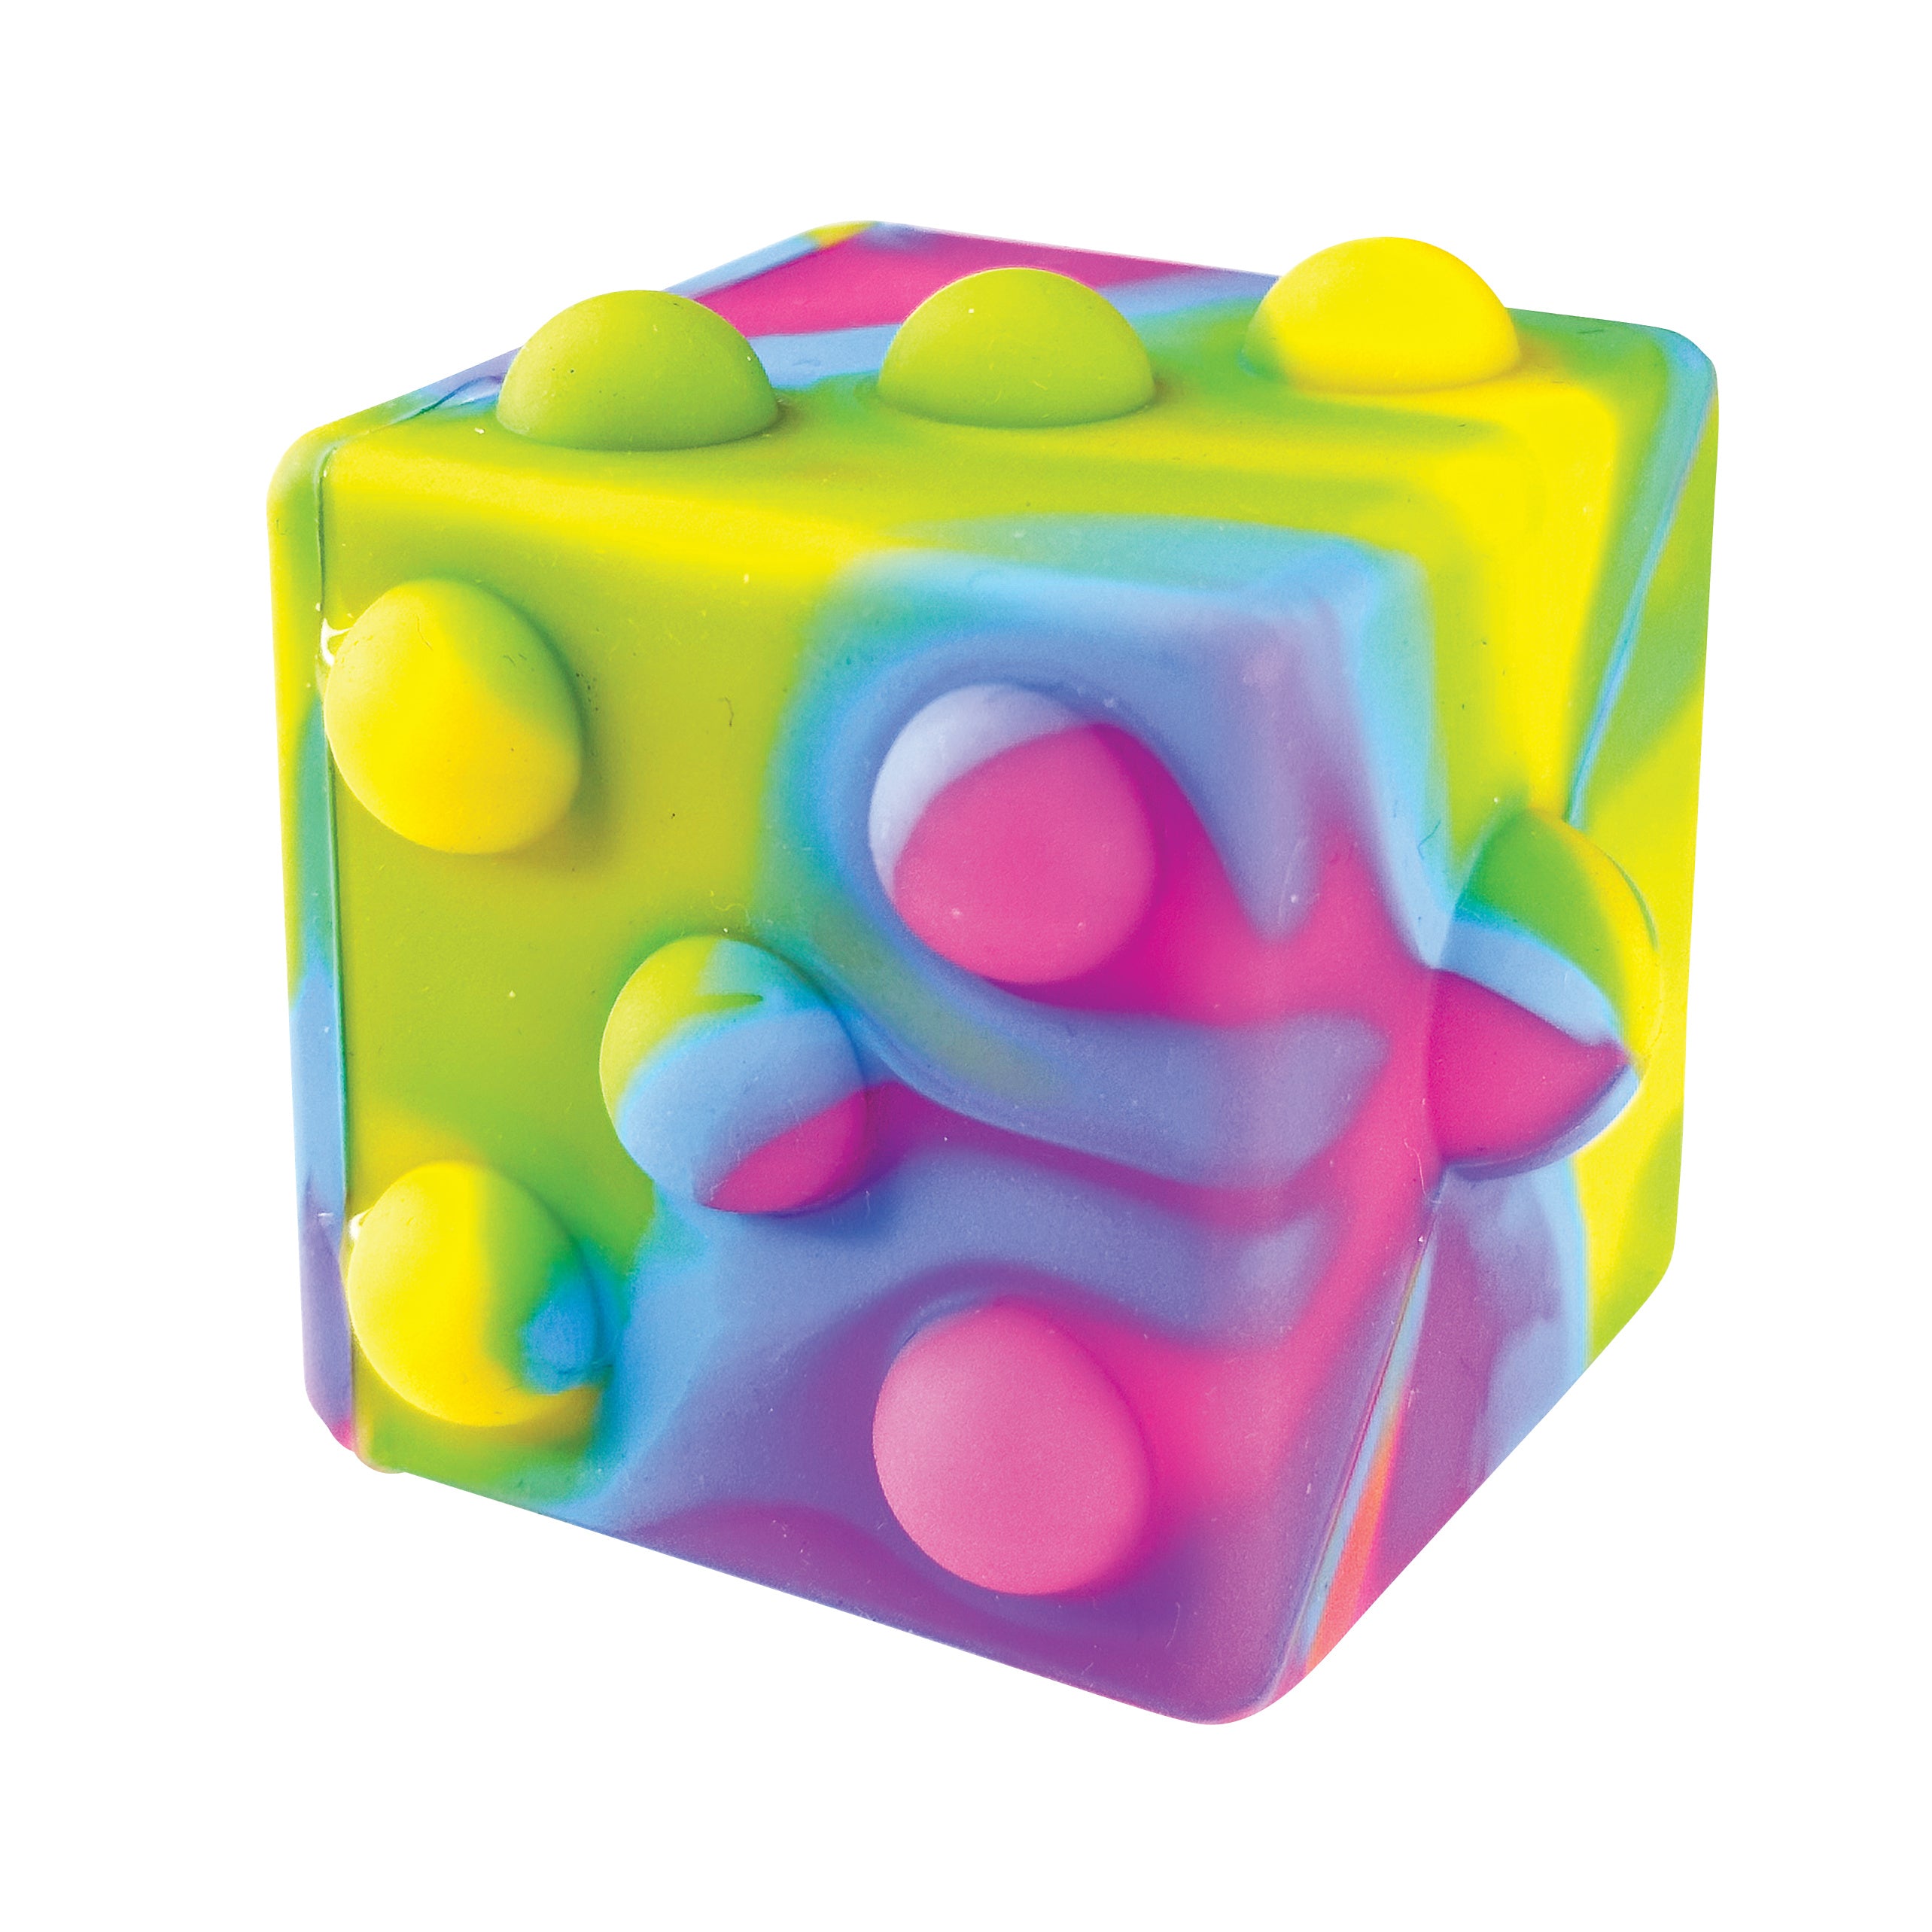 Pop ‘n’ Dice Cubes